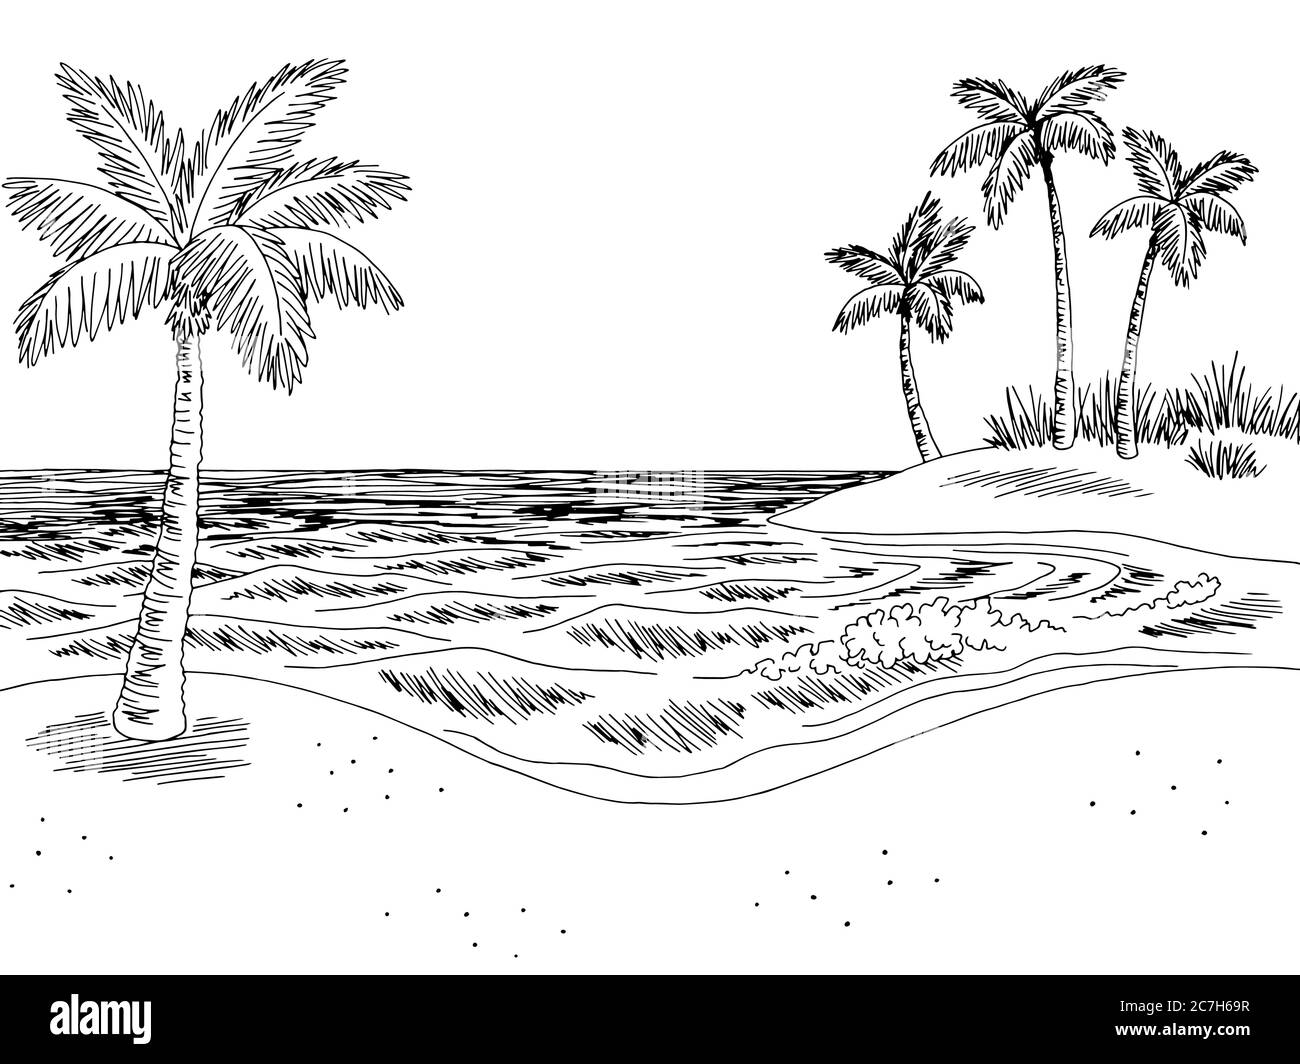 generate a drawing of a beautiful beach landscape I am hoping f   Arthubai